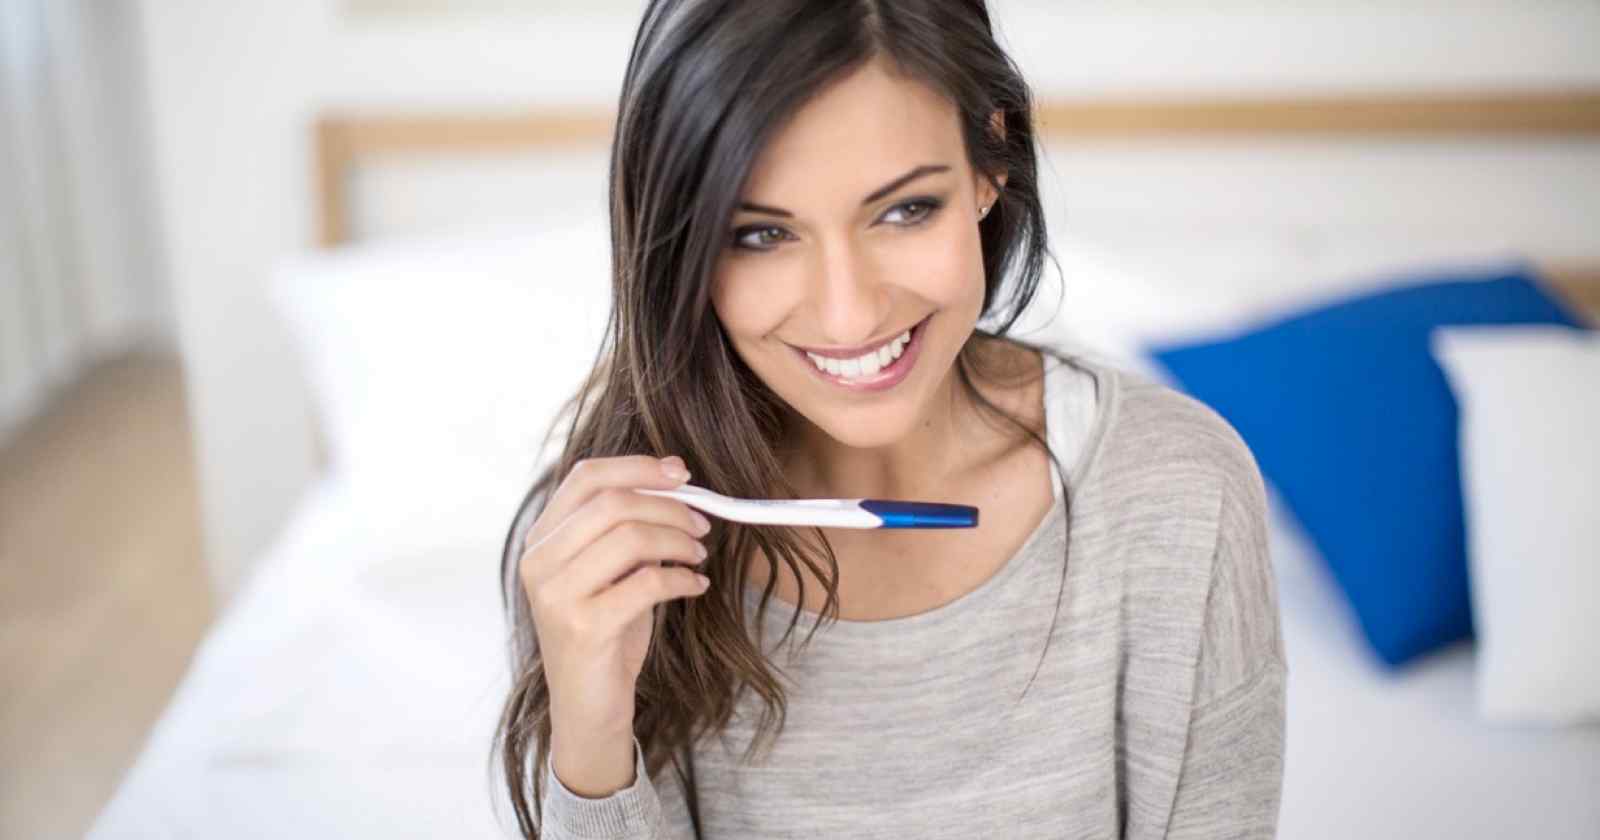 Test Enfa De Embarazo